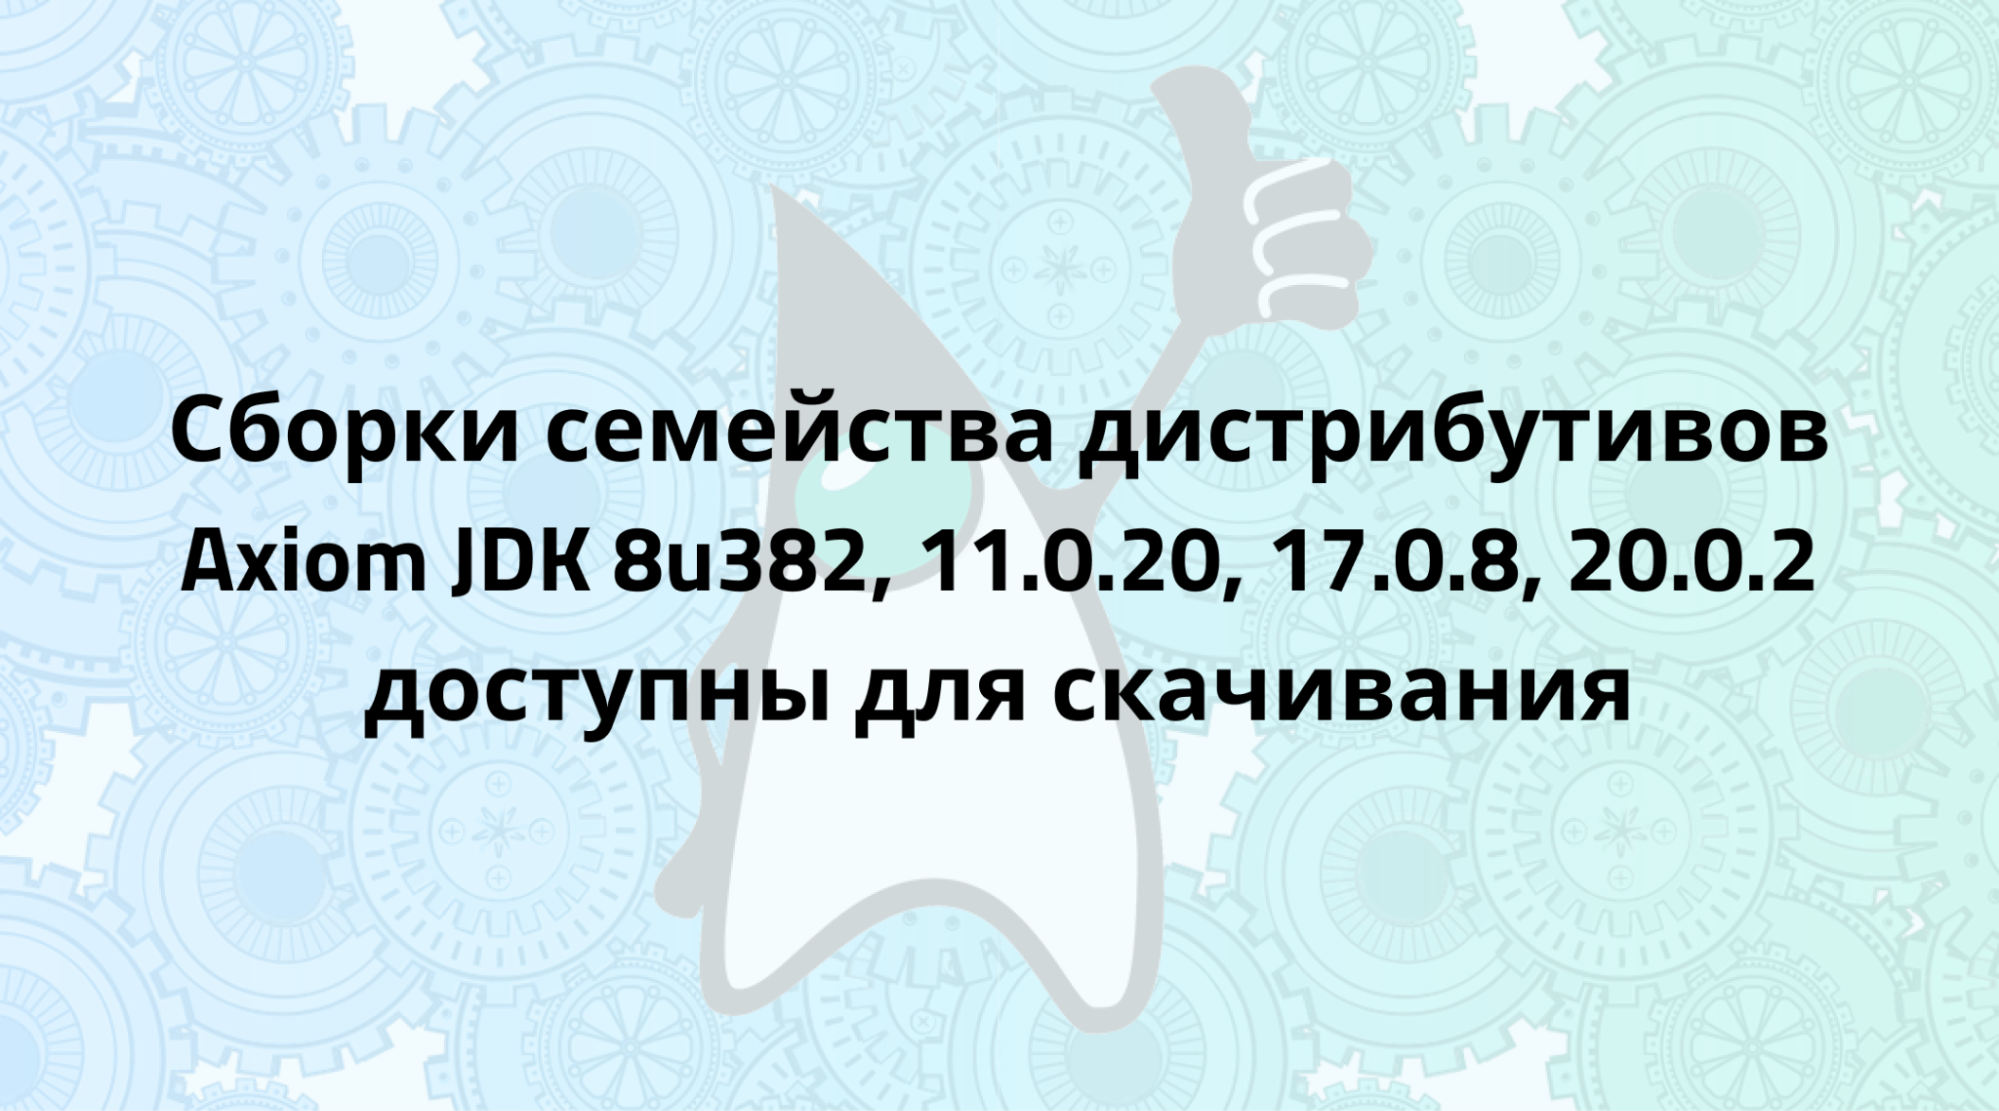 Axiom JDK 8u382, 11.0.20, 17.0.8, 20.0.2 доступны для загрузки